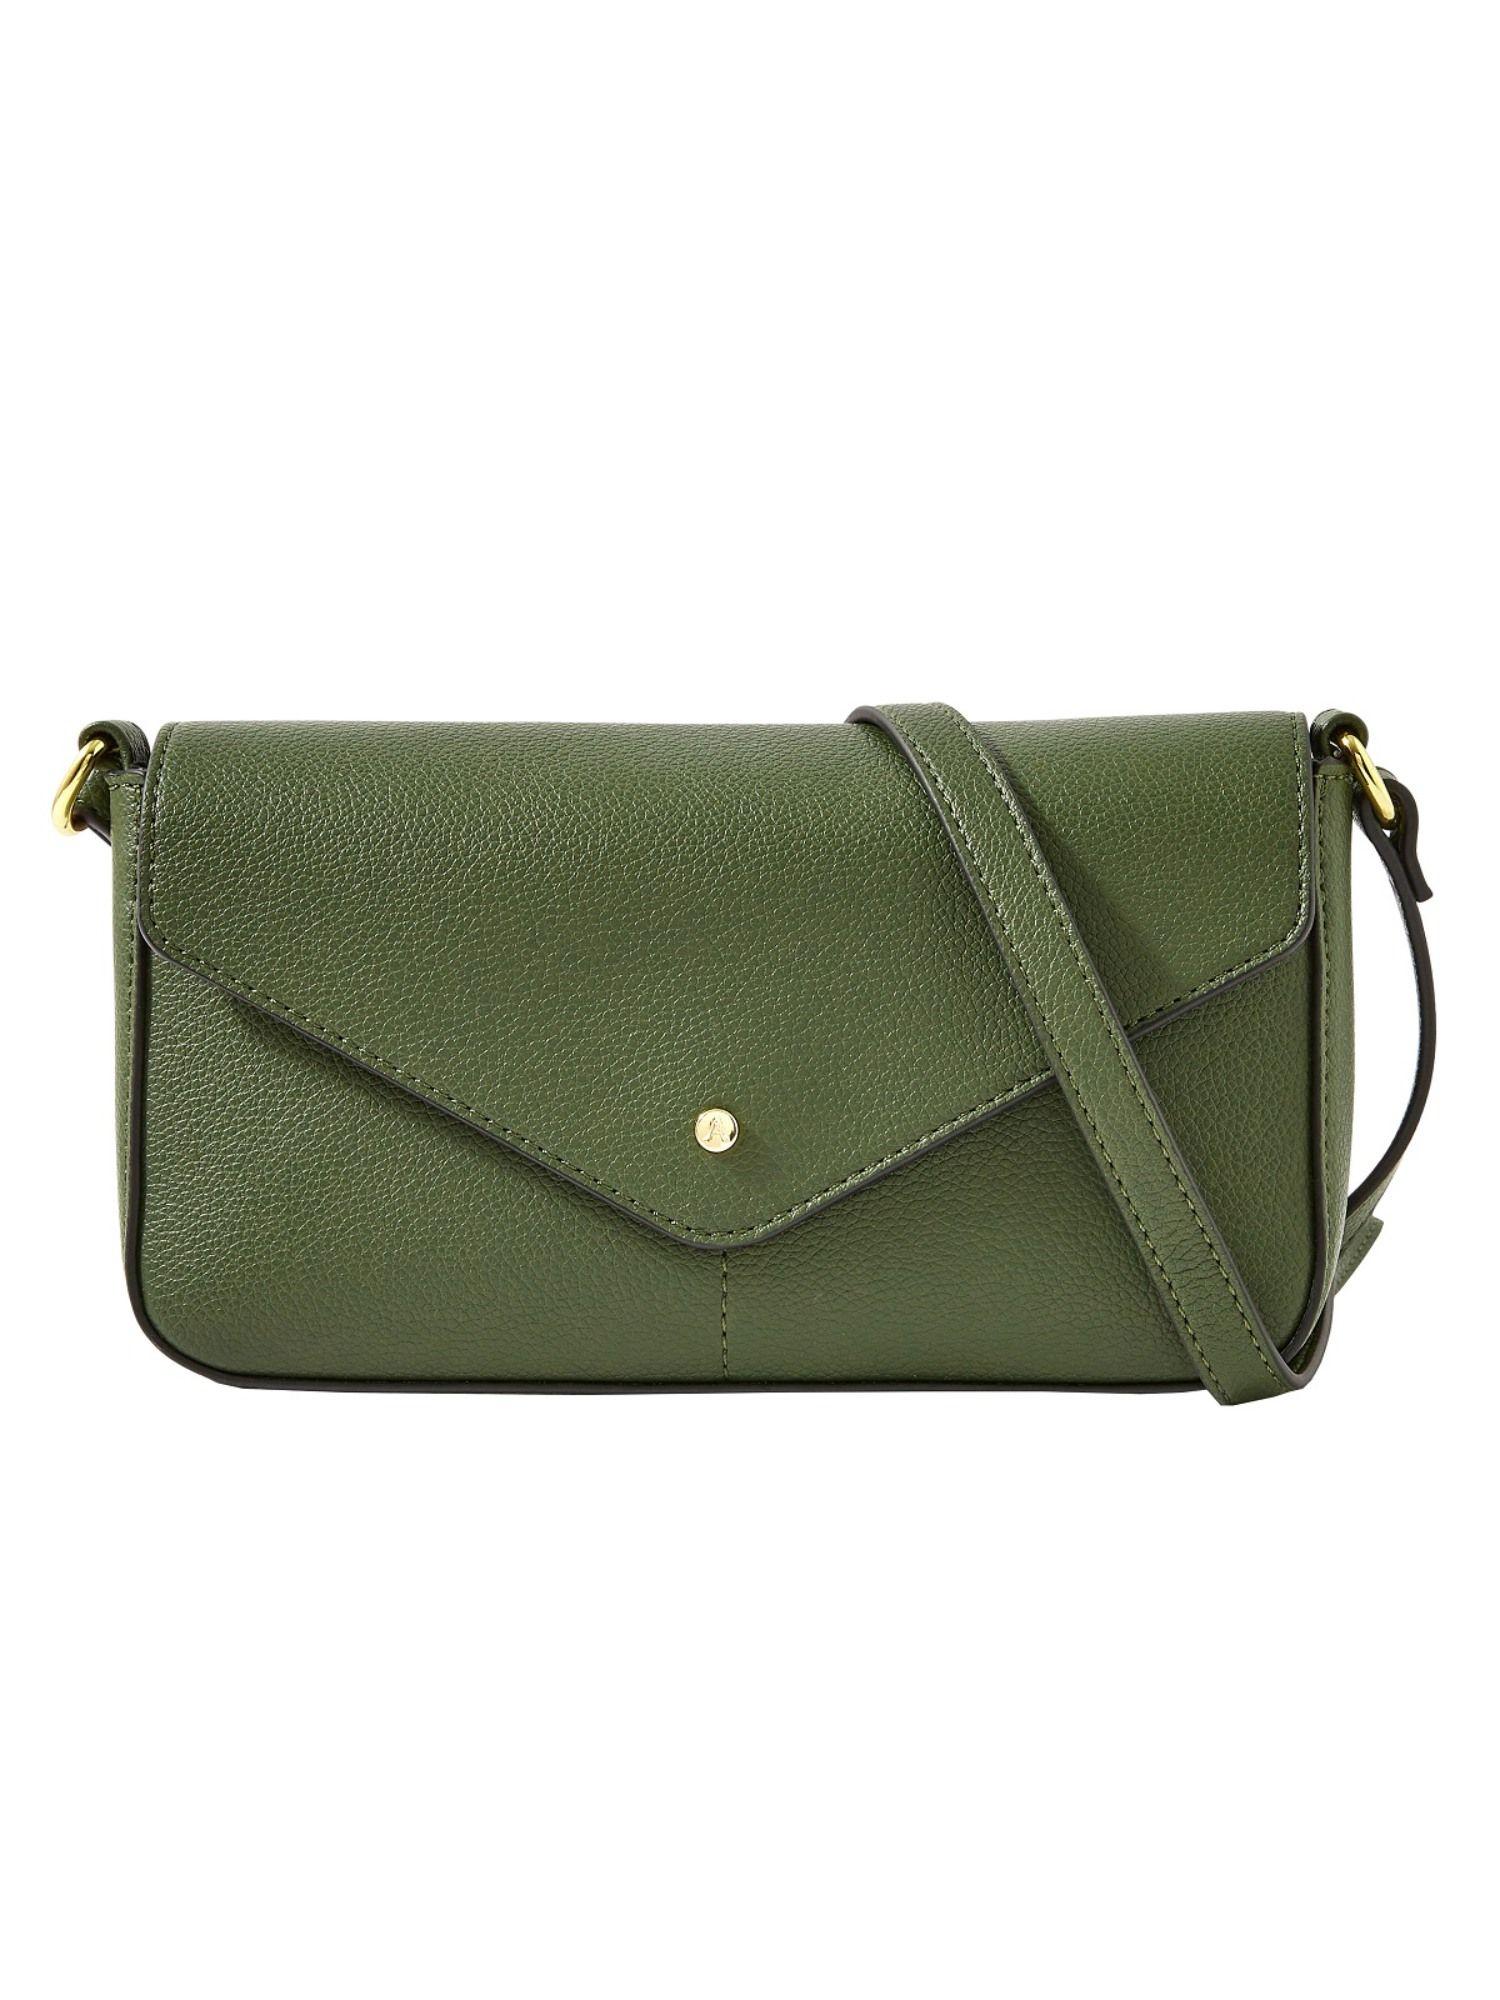 women's faux leather green envelope charm sling bag